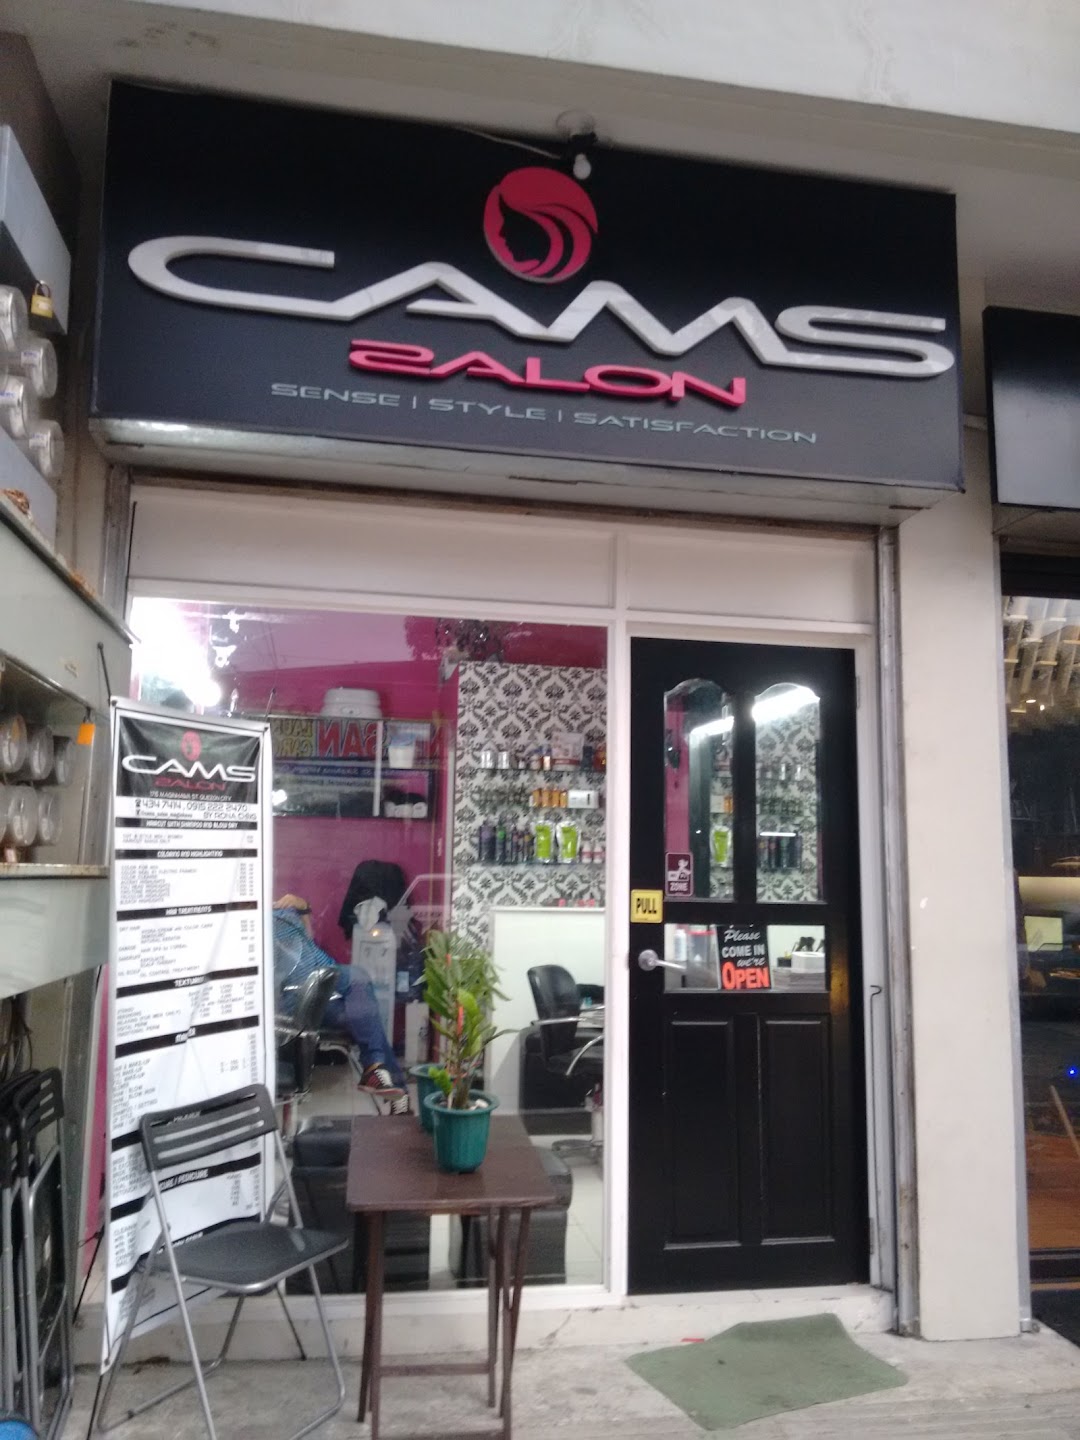 Cams Salon